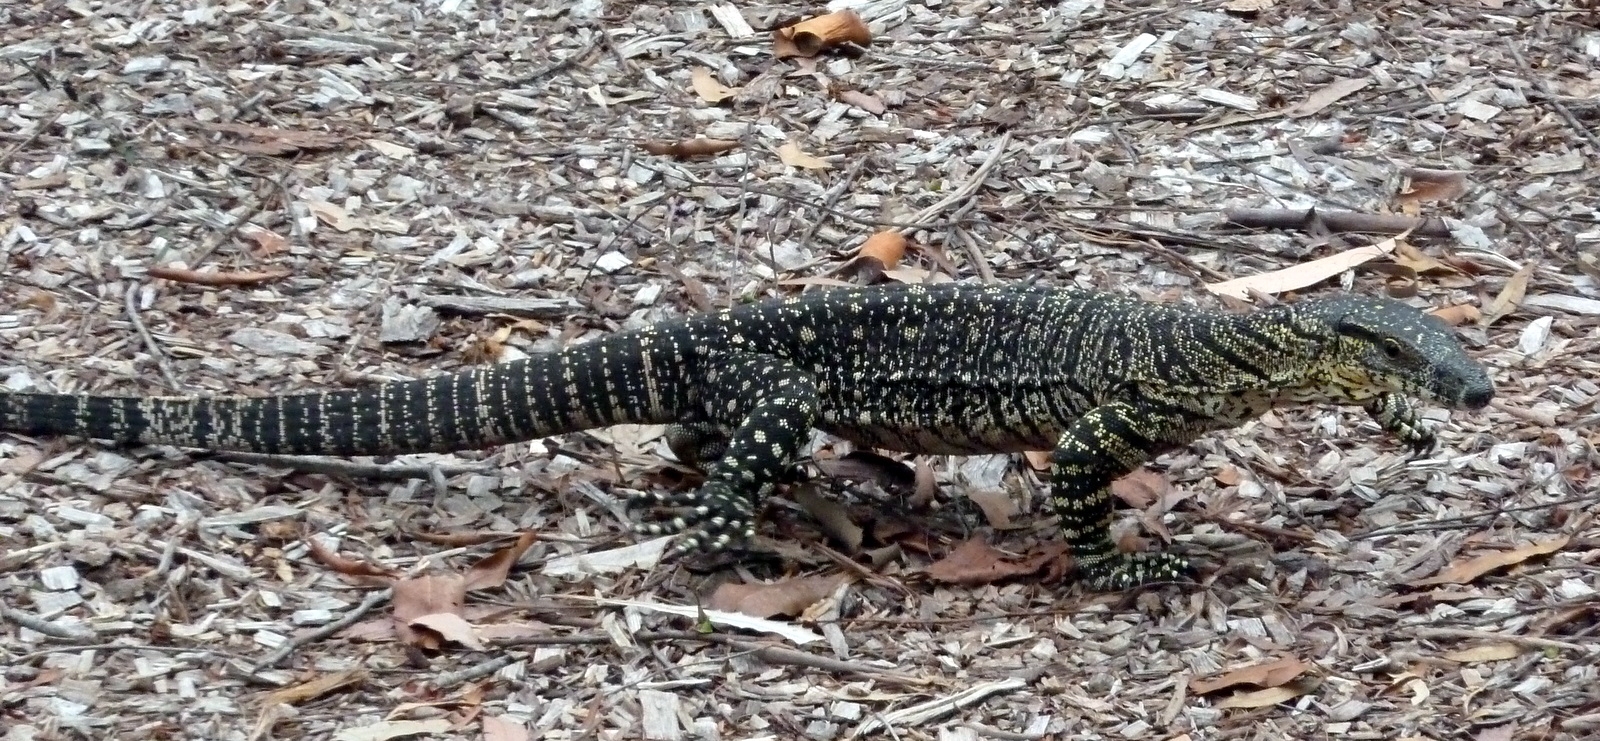 Fraser Island Lizard